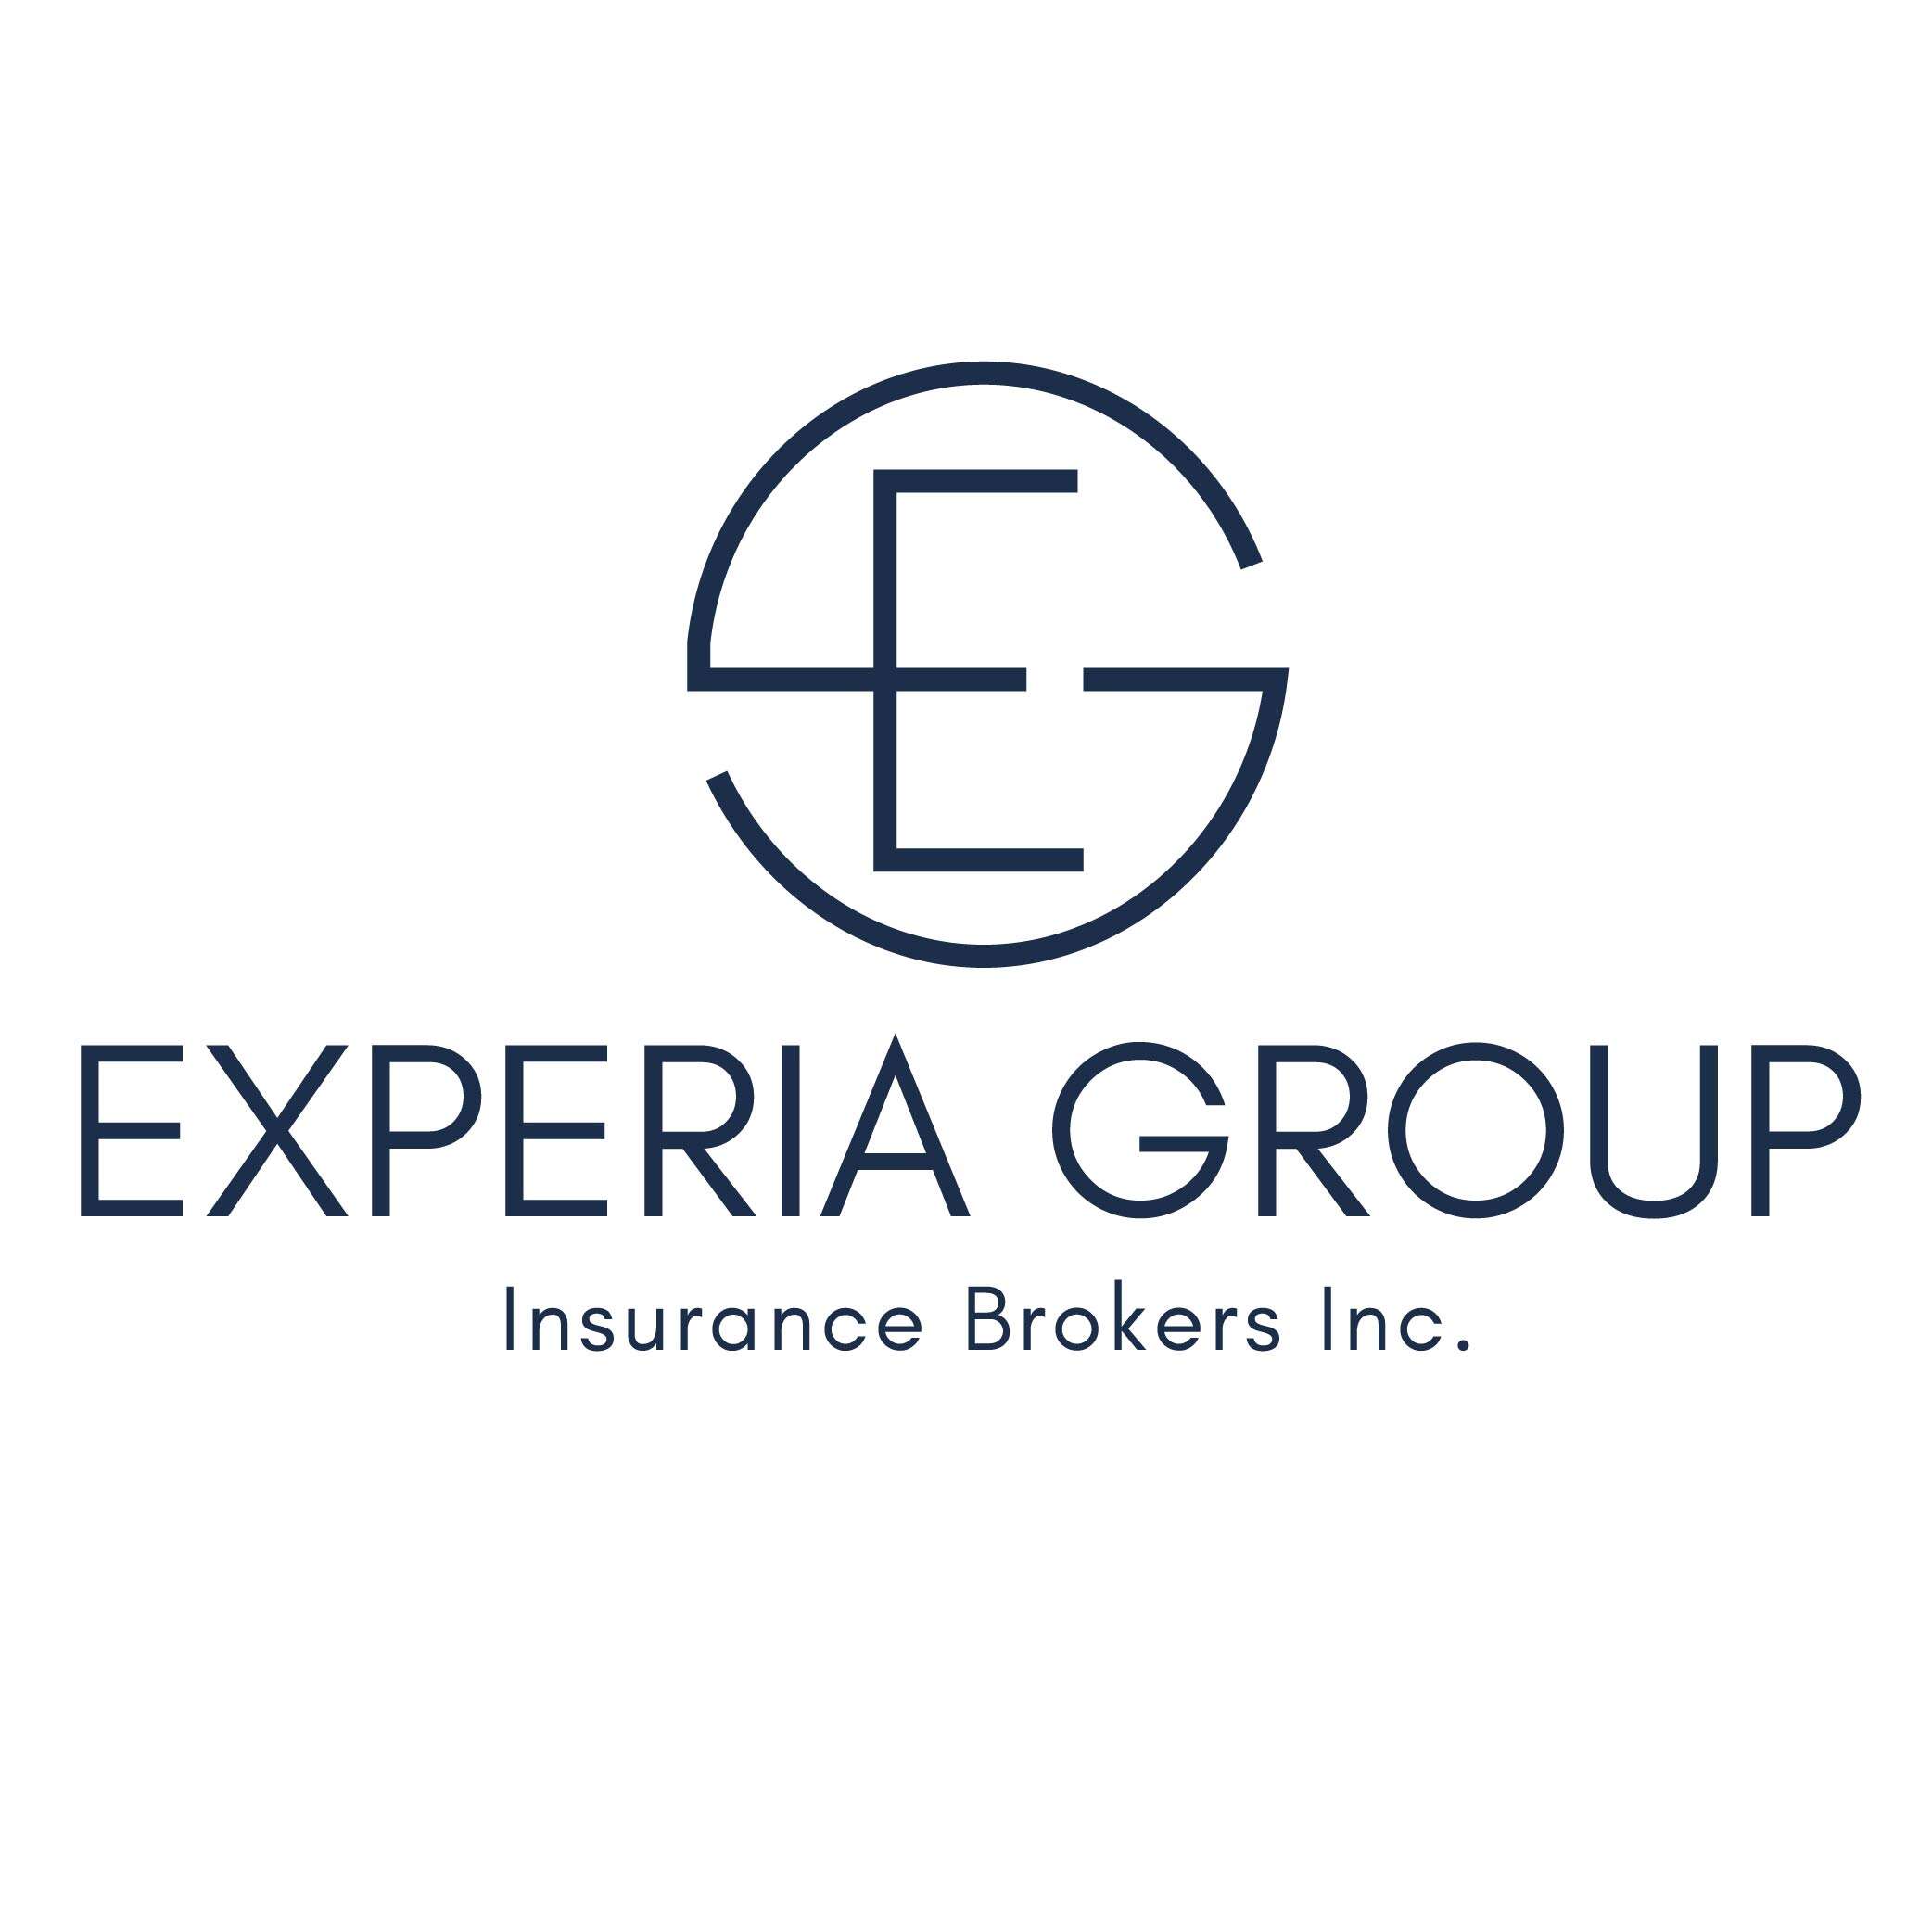 Experia Group